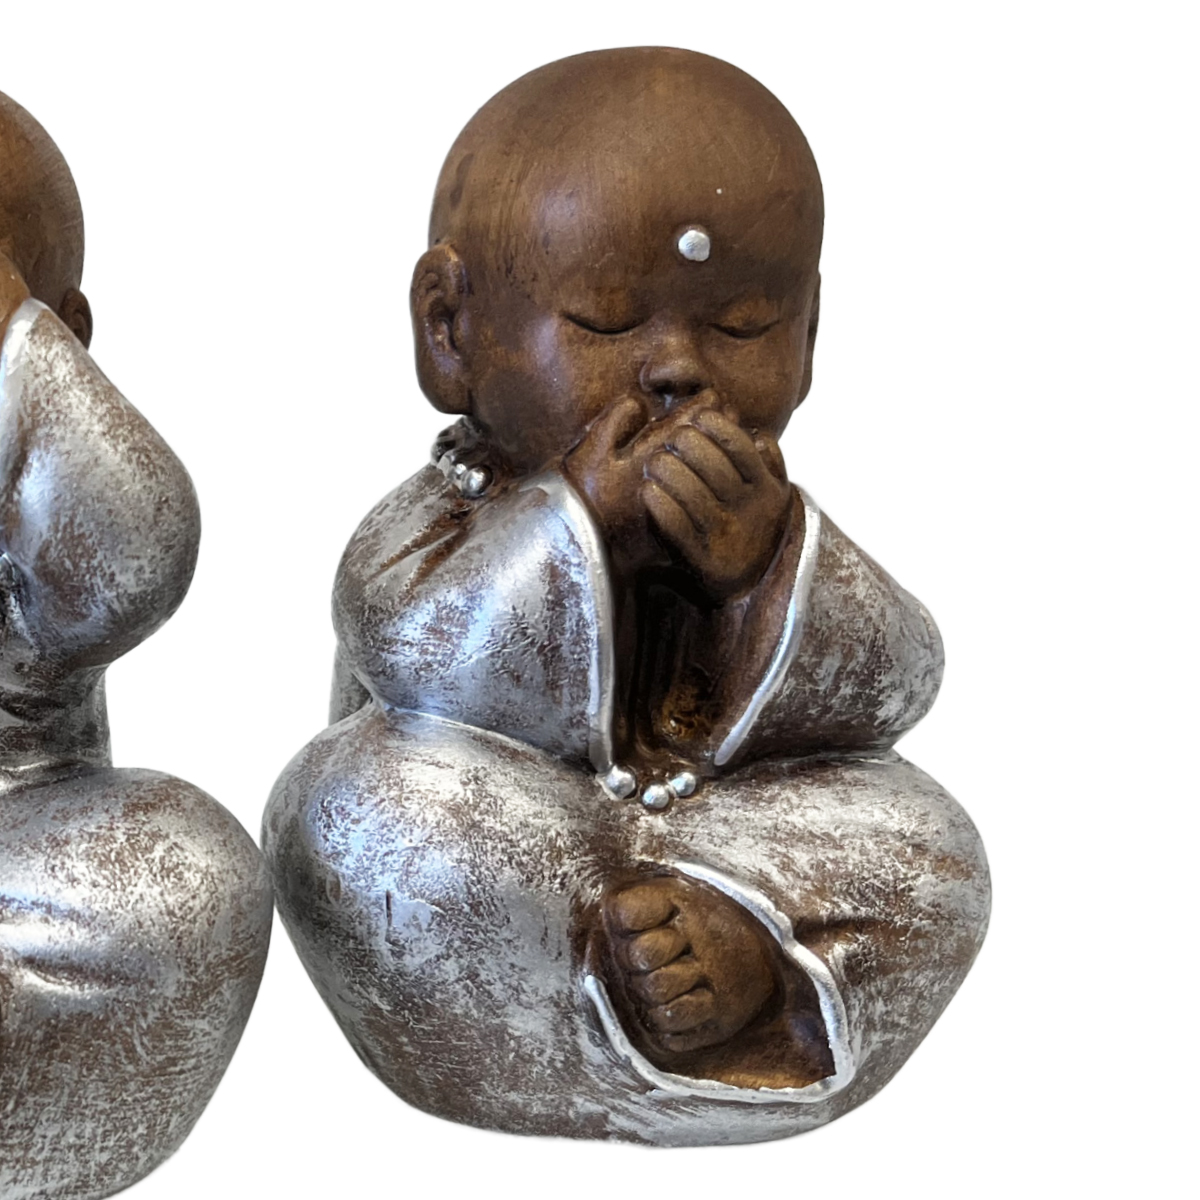 Ceramic statues trio of small Buddhist monks